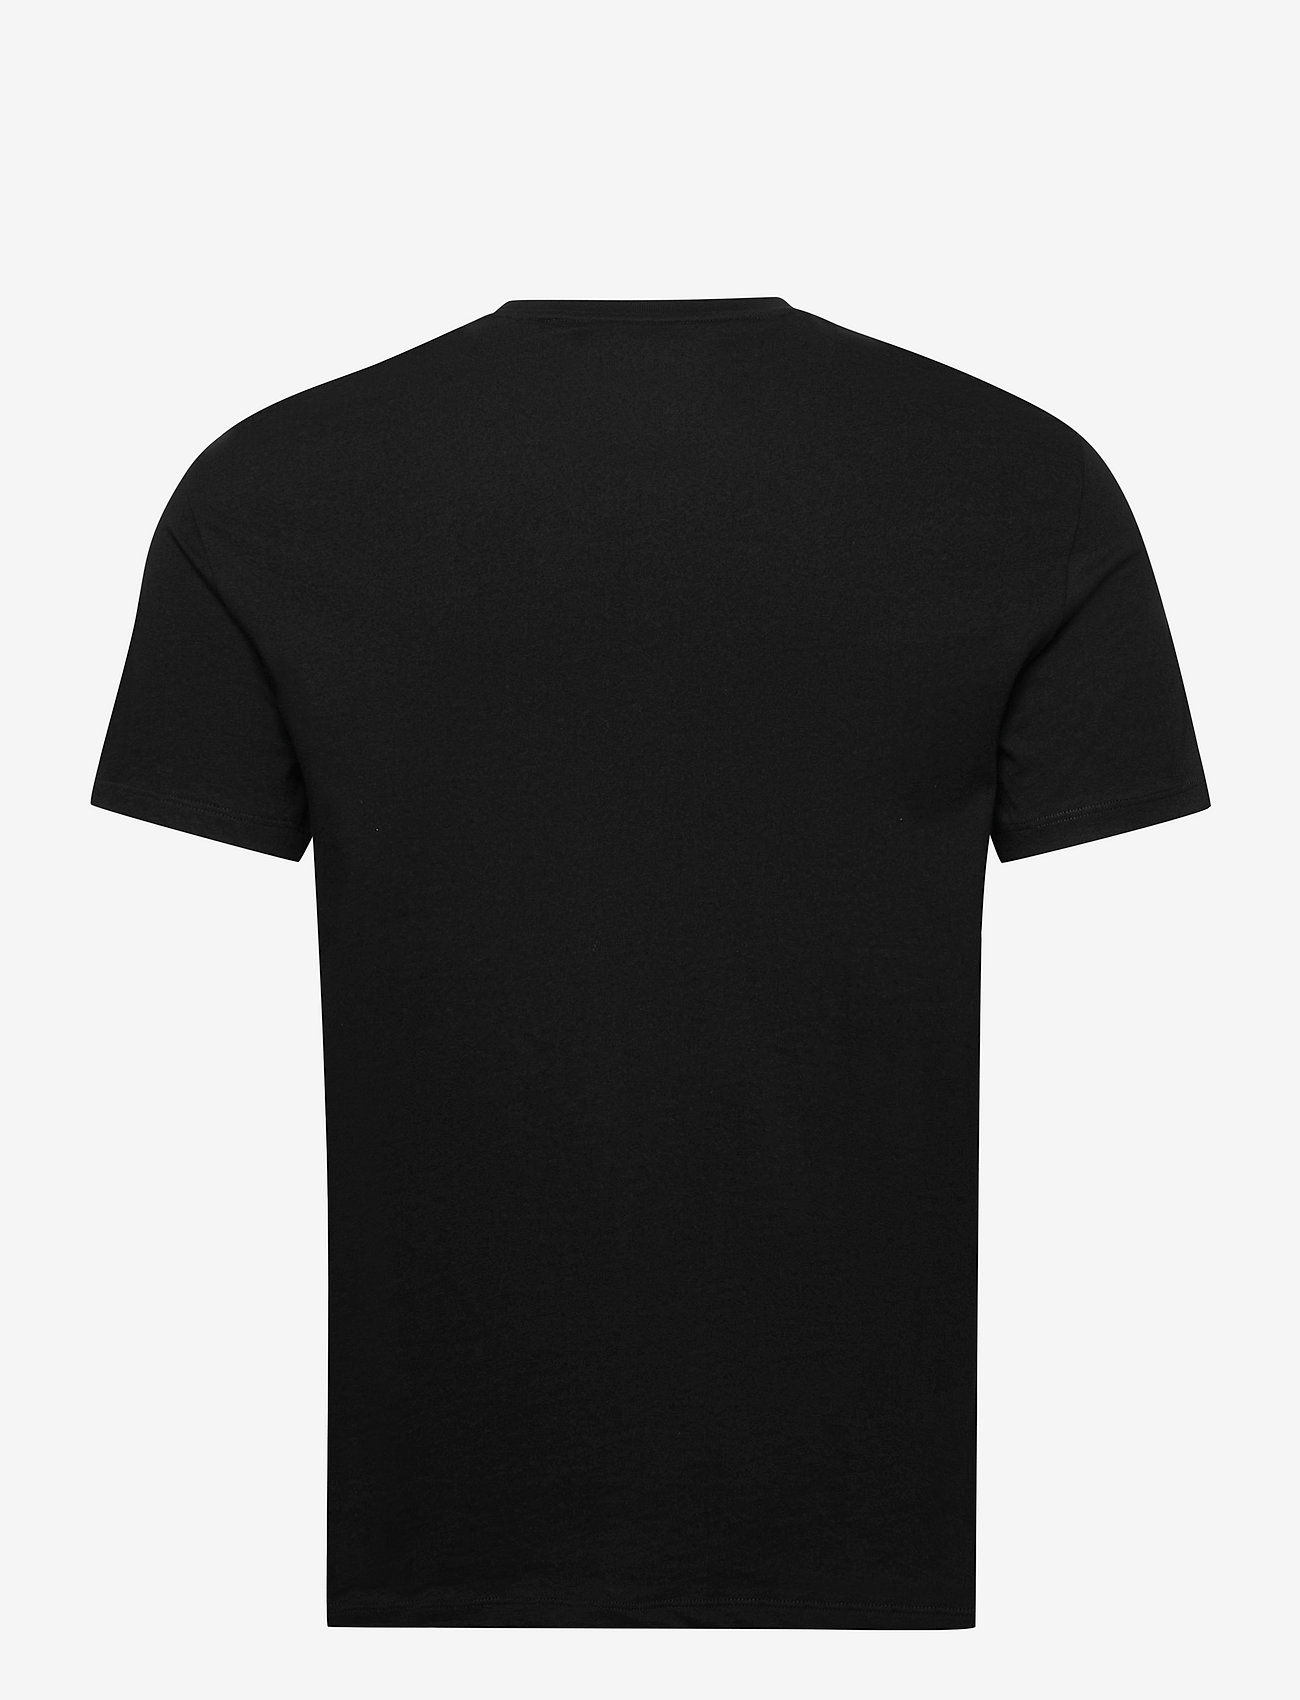 Armani Exchange - T-SHIRT - podstawowe koszulki - black - 1